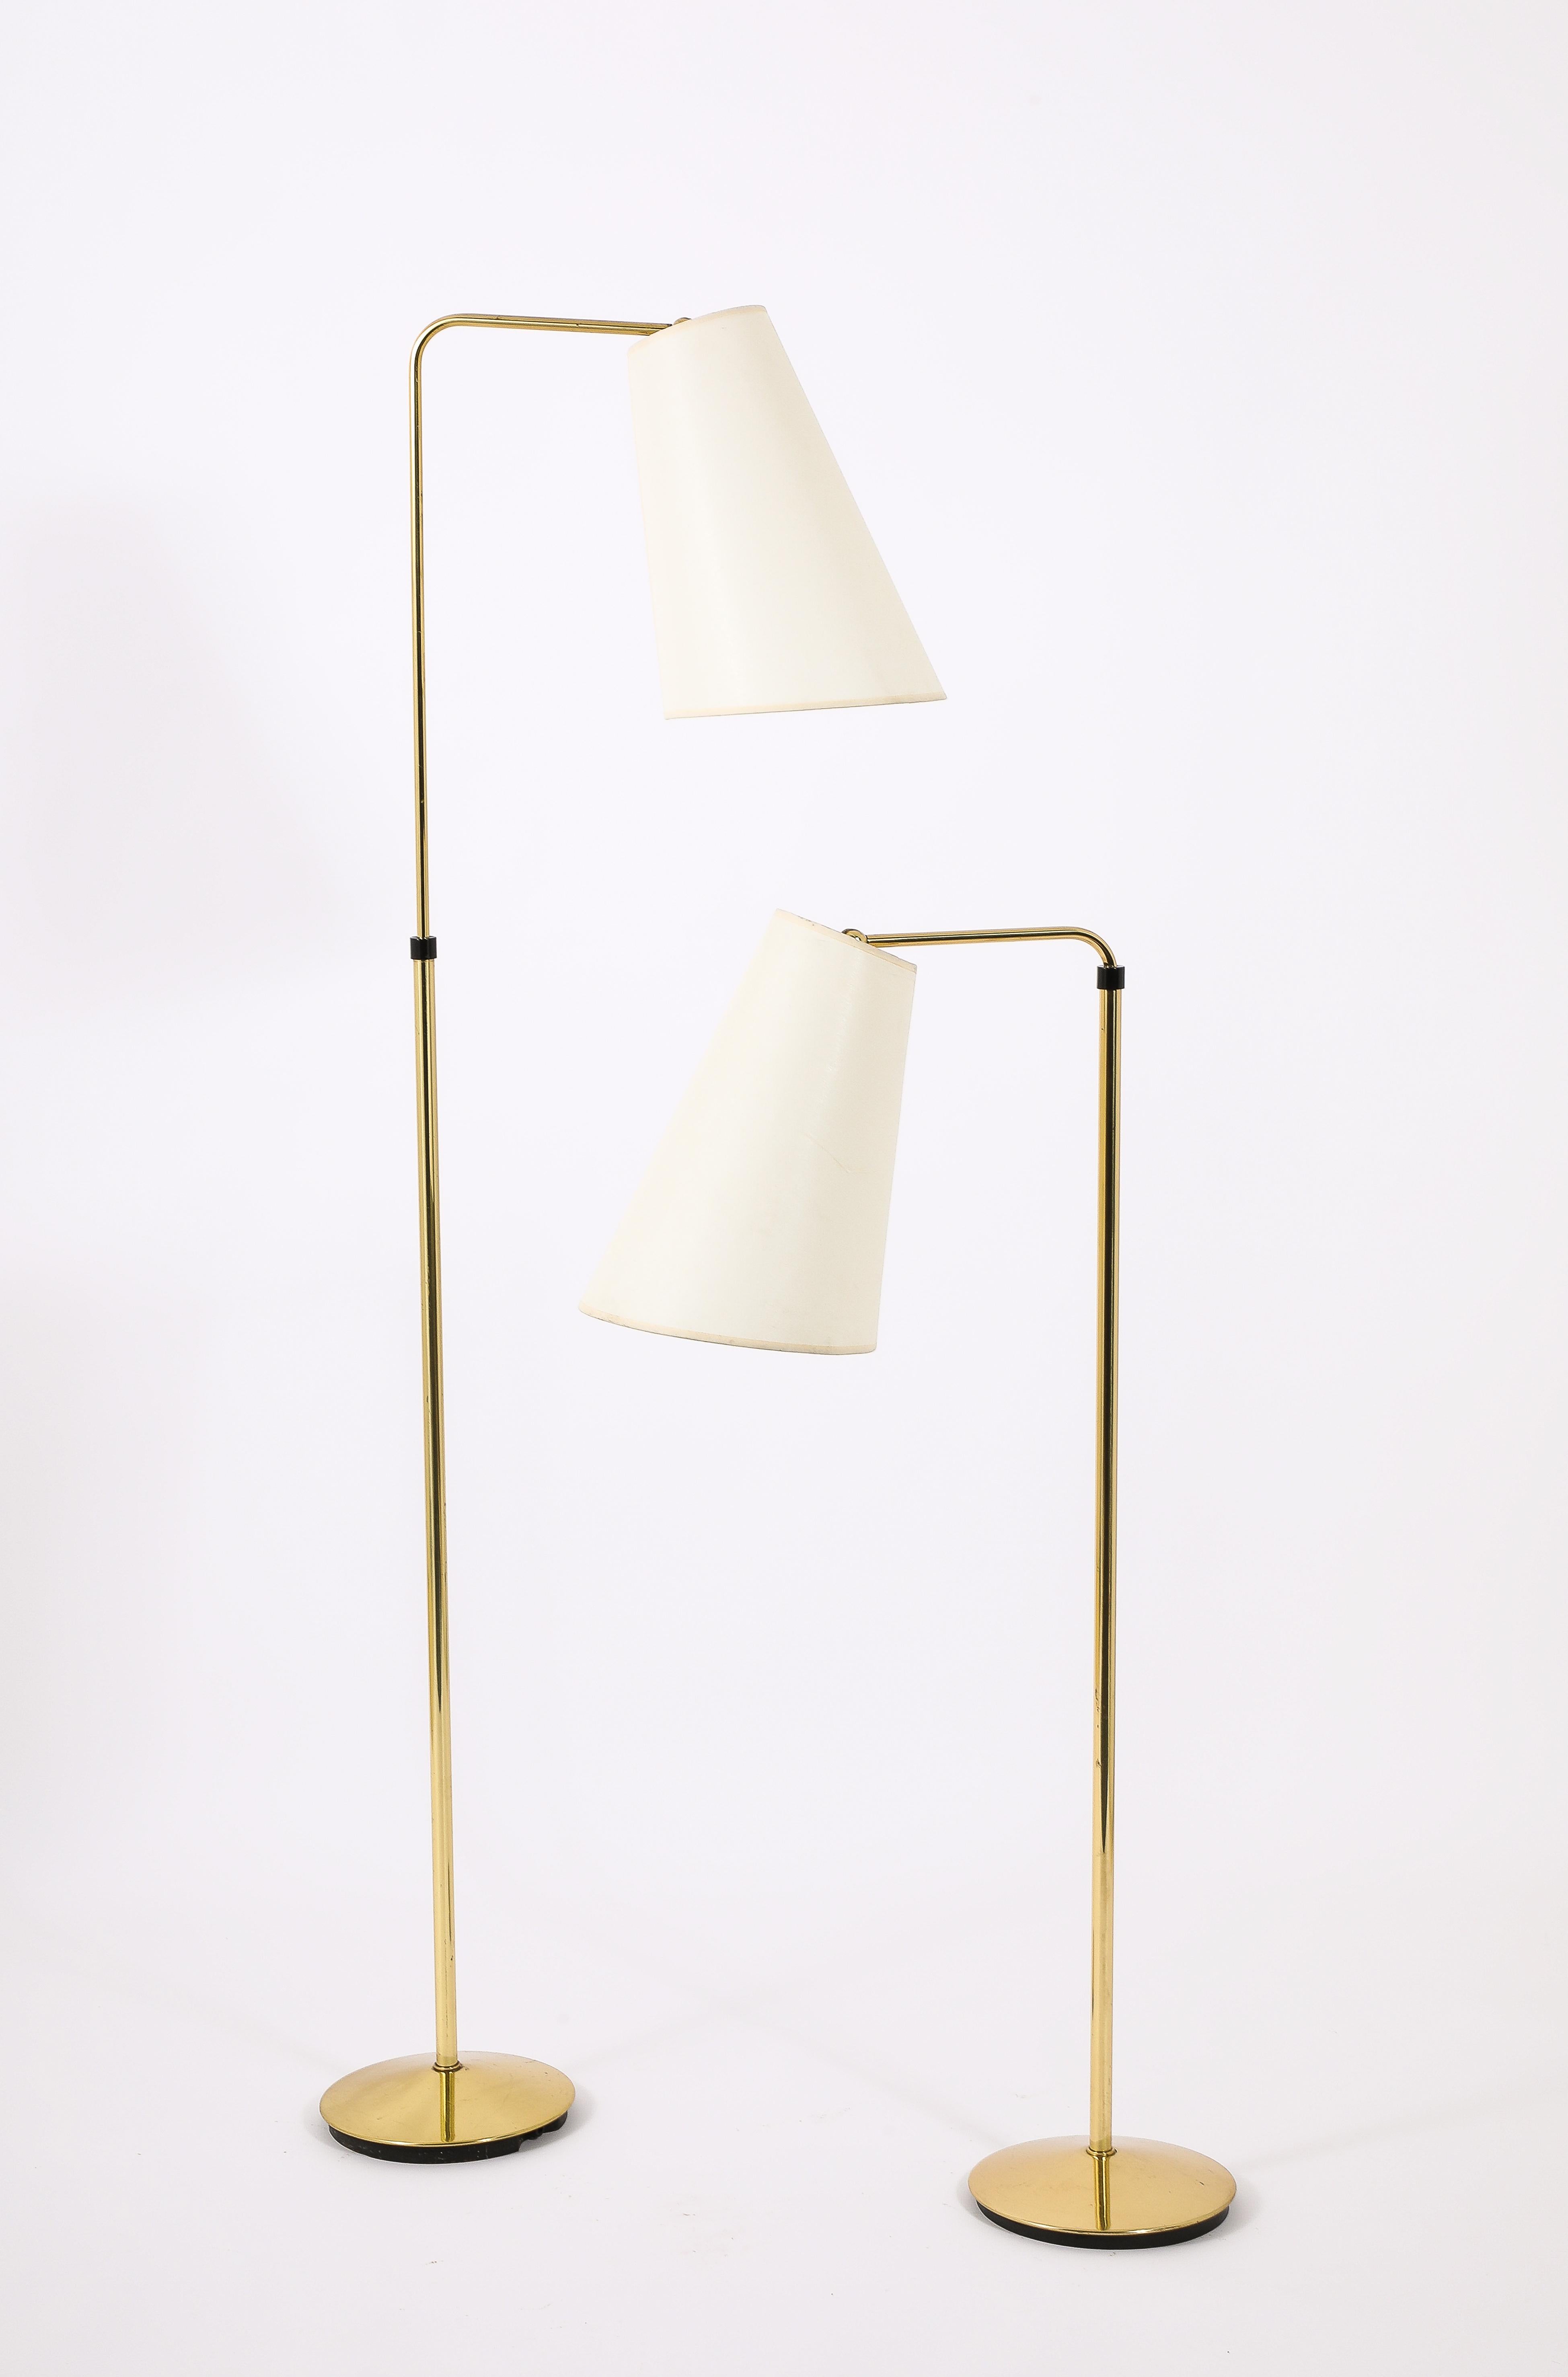 20th Century Metalarte Brass Reading Floor Lamps, Spain 1960's For Sale